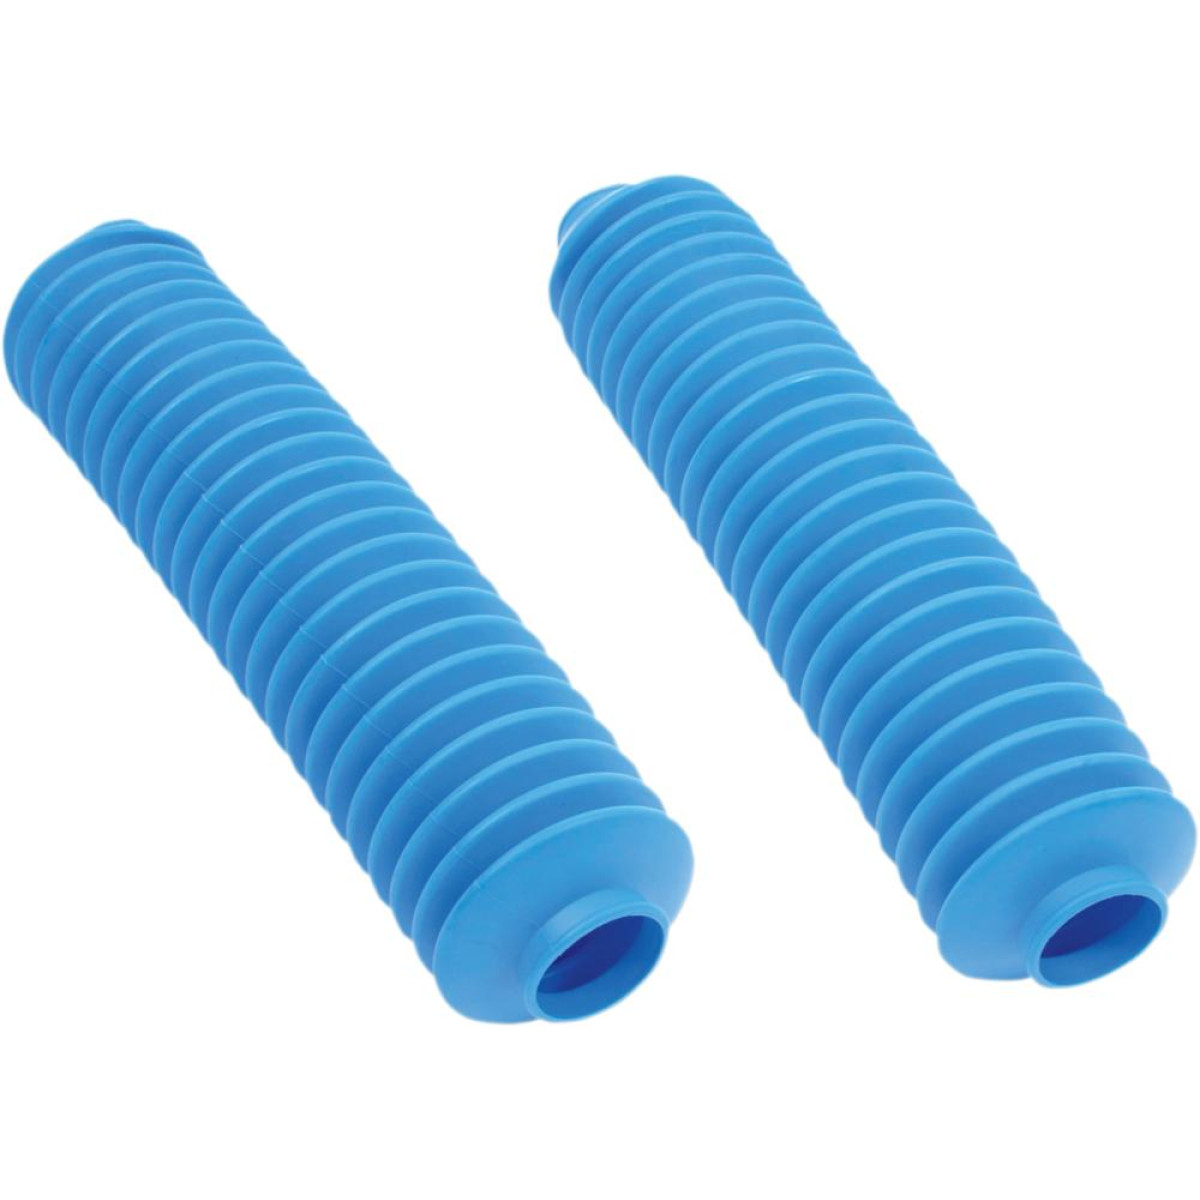 Zanbaline Soufflets de Fourche  33 cm travel, 40-48 mm upper, 50.8-63.5 mm lower, Blue